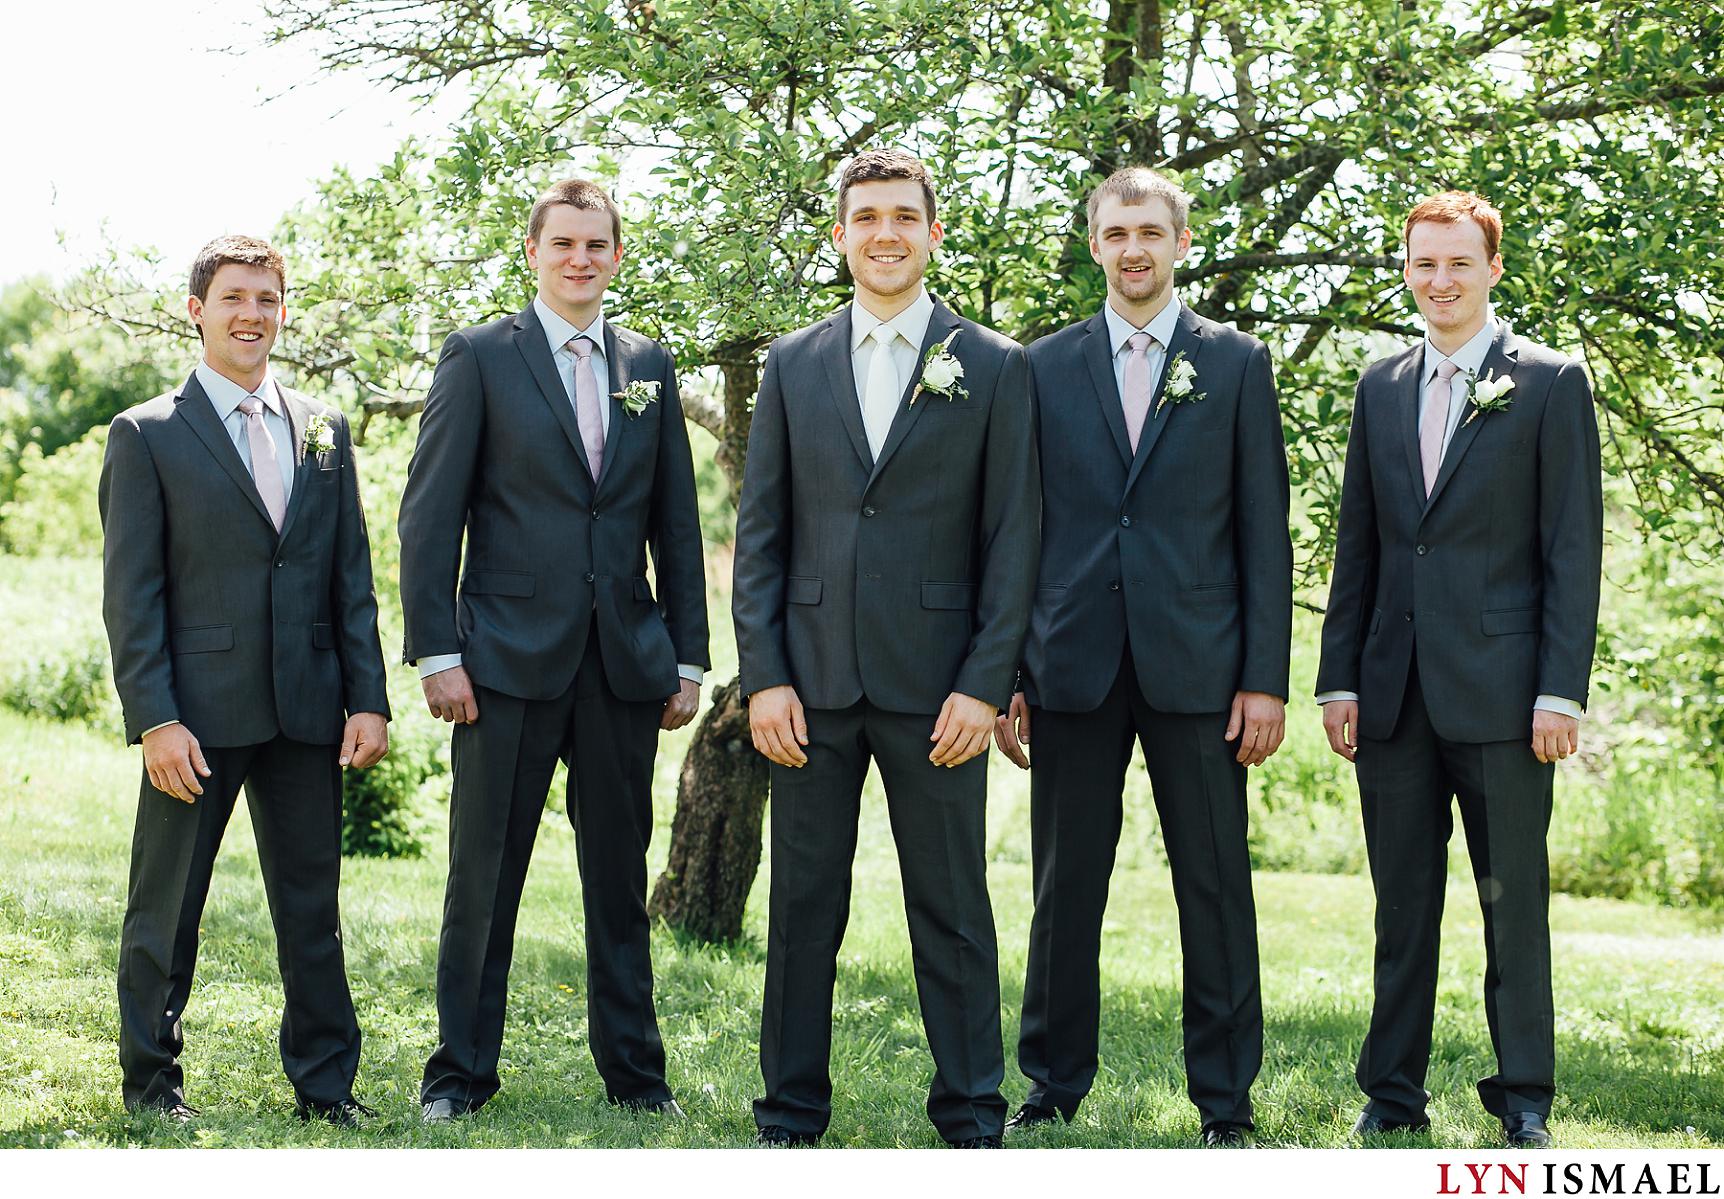 Portrait of the groom and his groomsmen